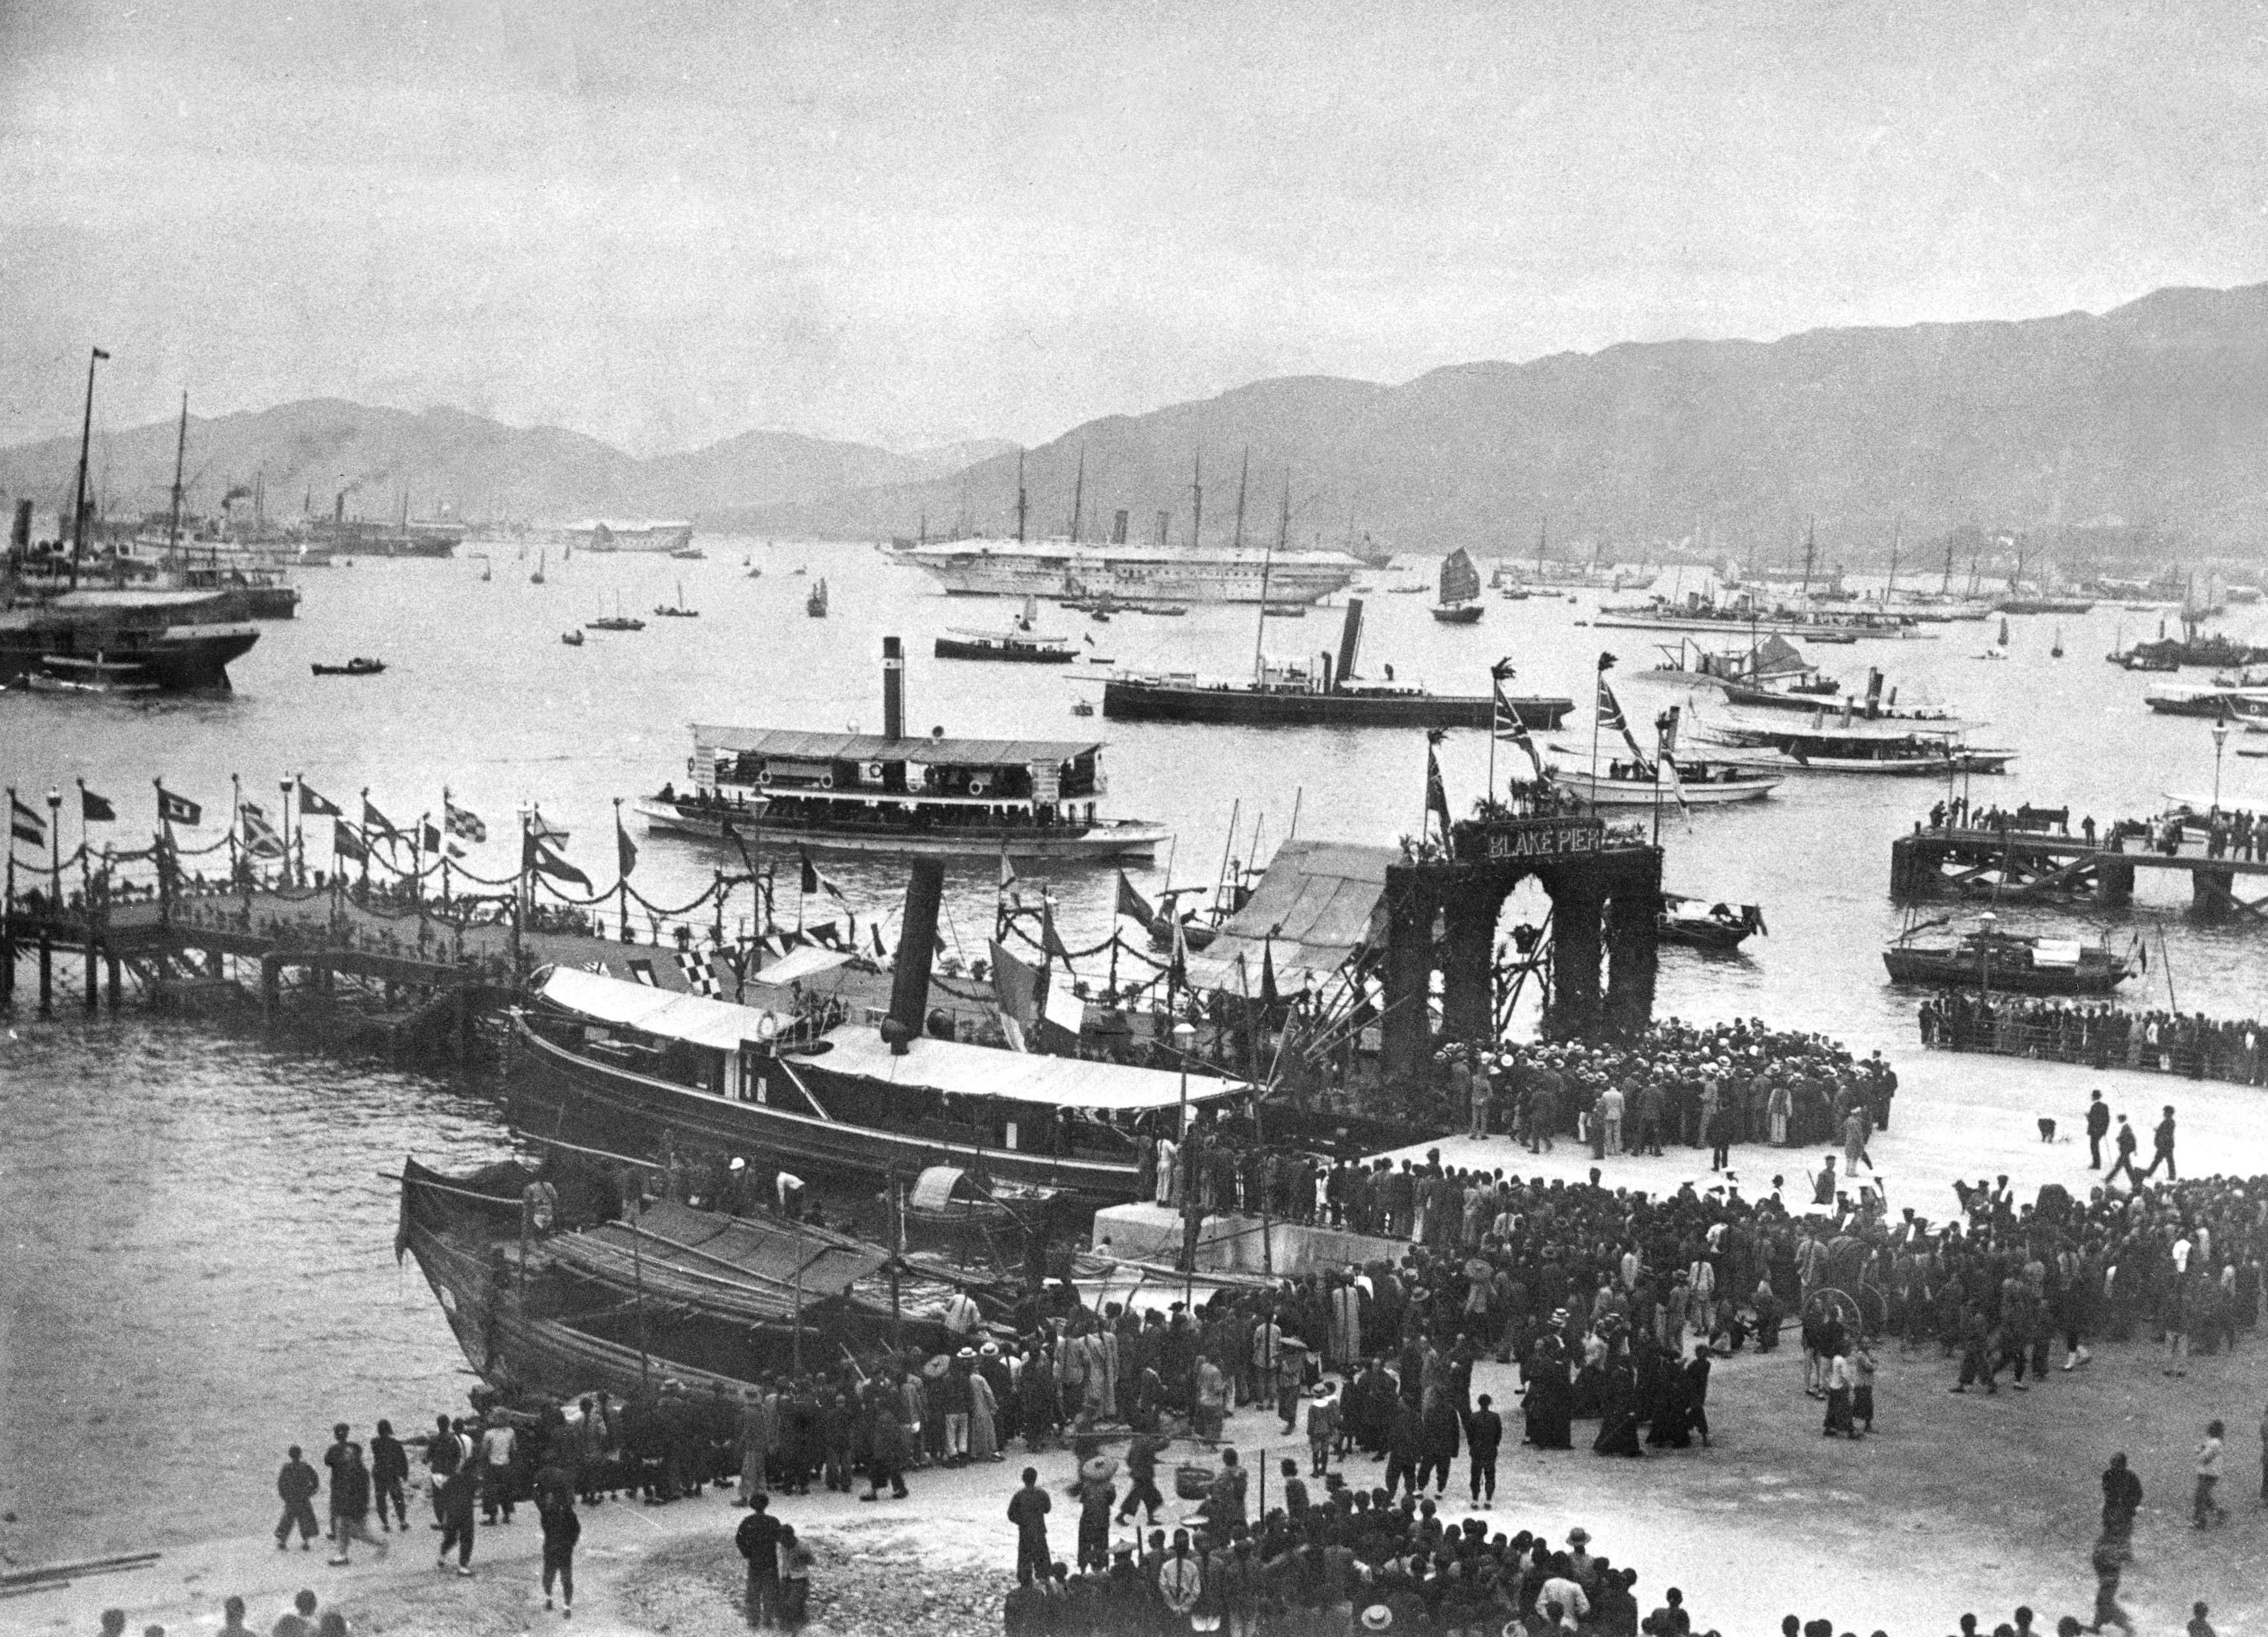 Blake Pier in Central, Hong Kong, circa 1900. Photo: Staff photographer